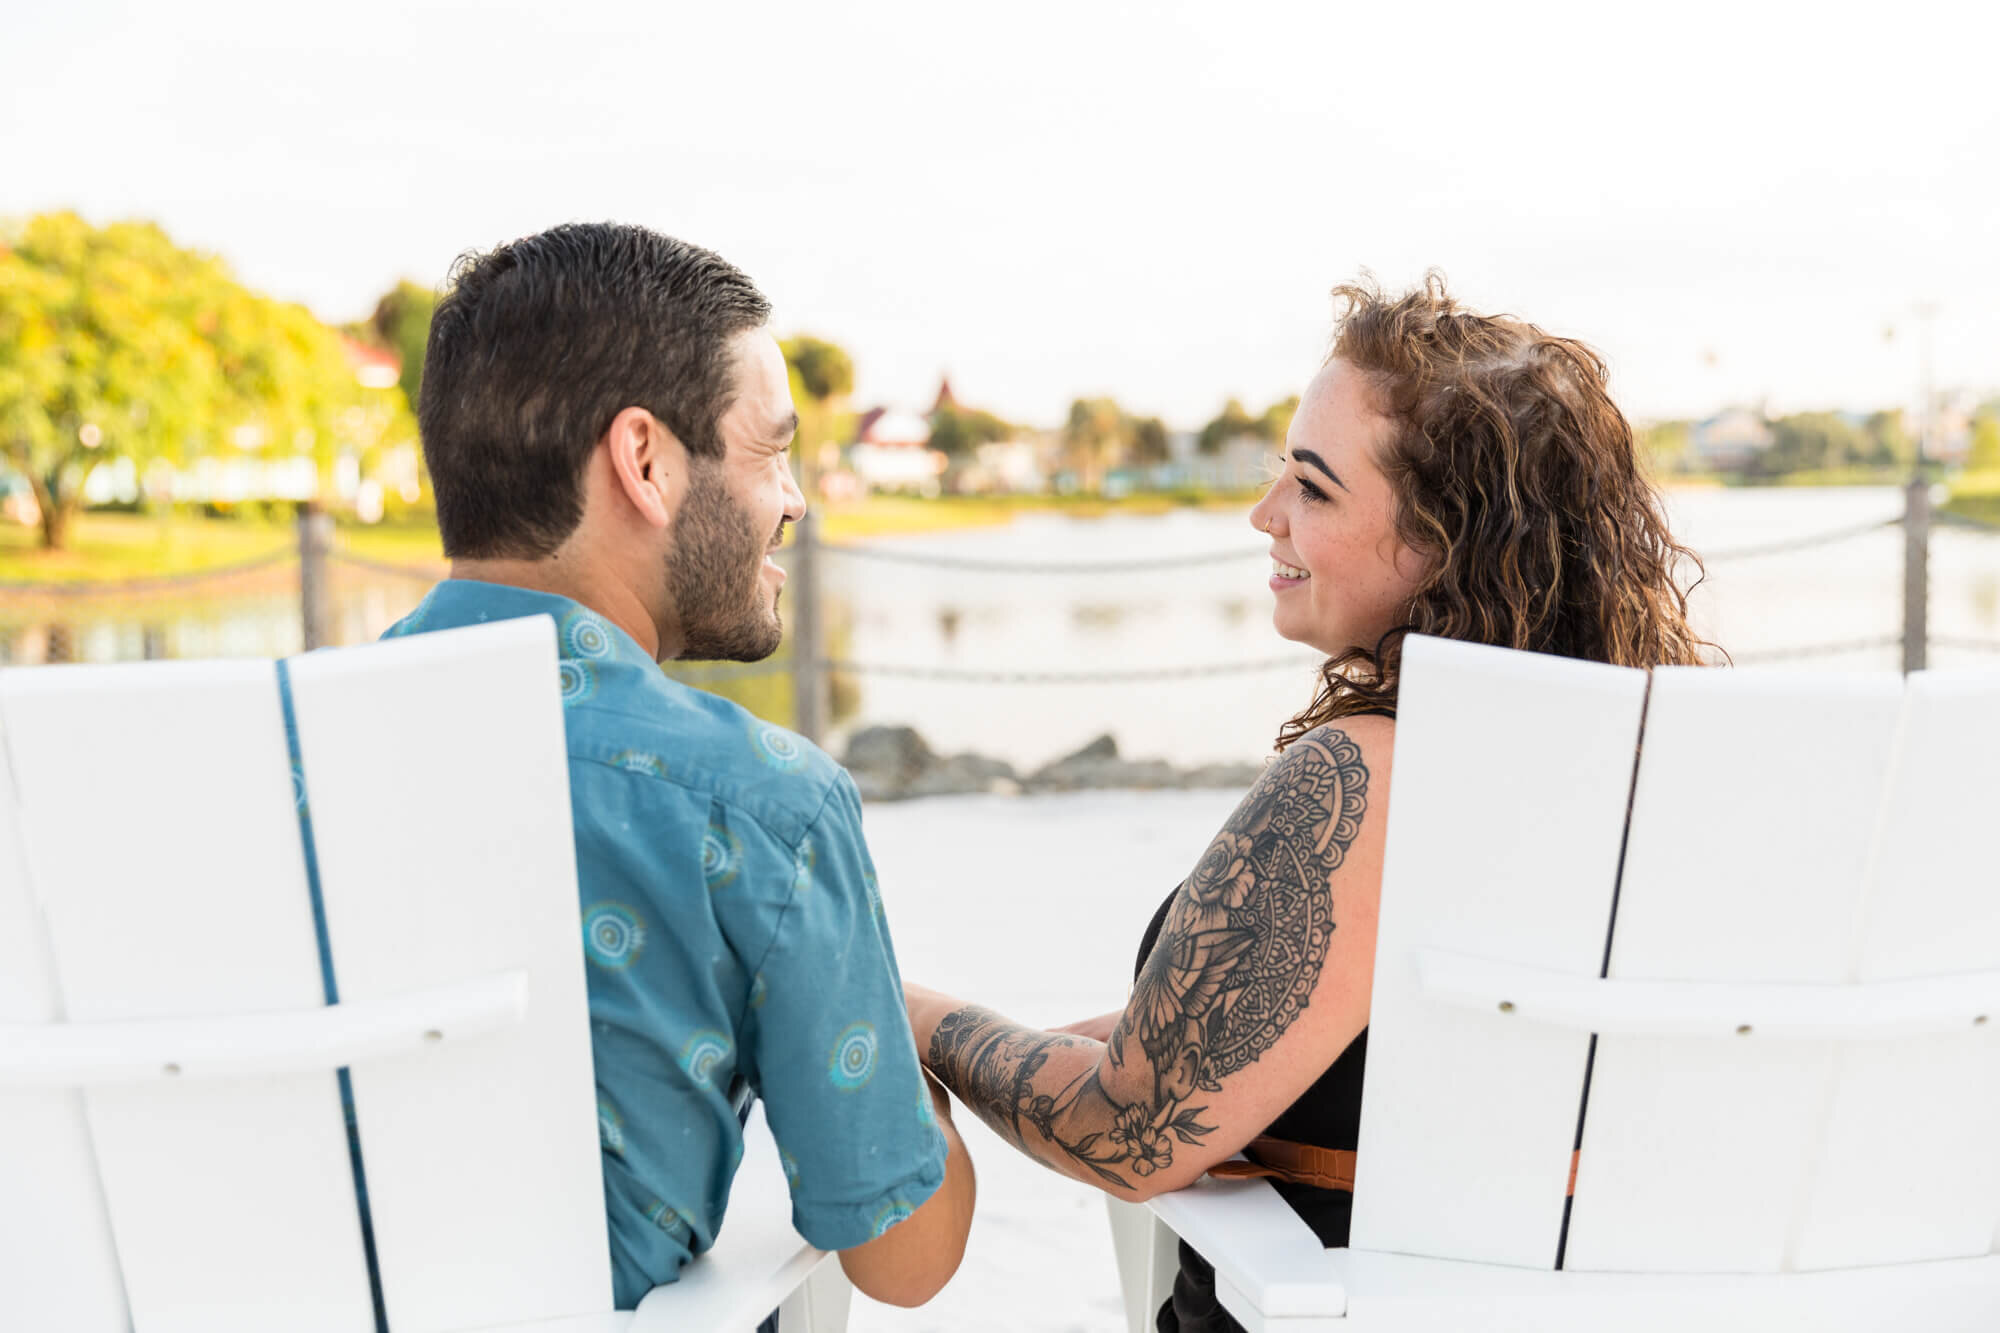  Surprise marriage proposal at Disney's Riviera Resort, Orlando, Florida 